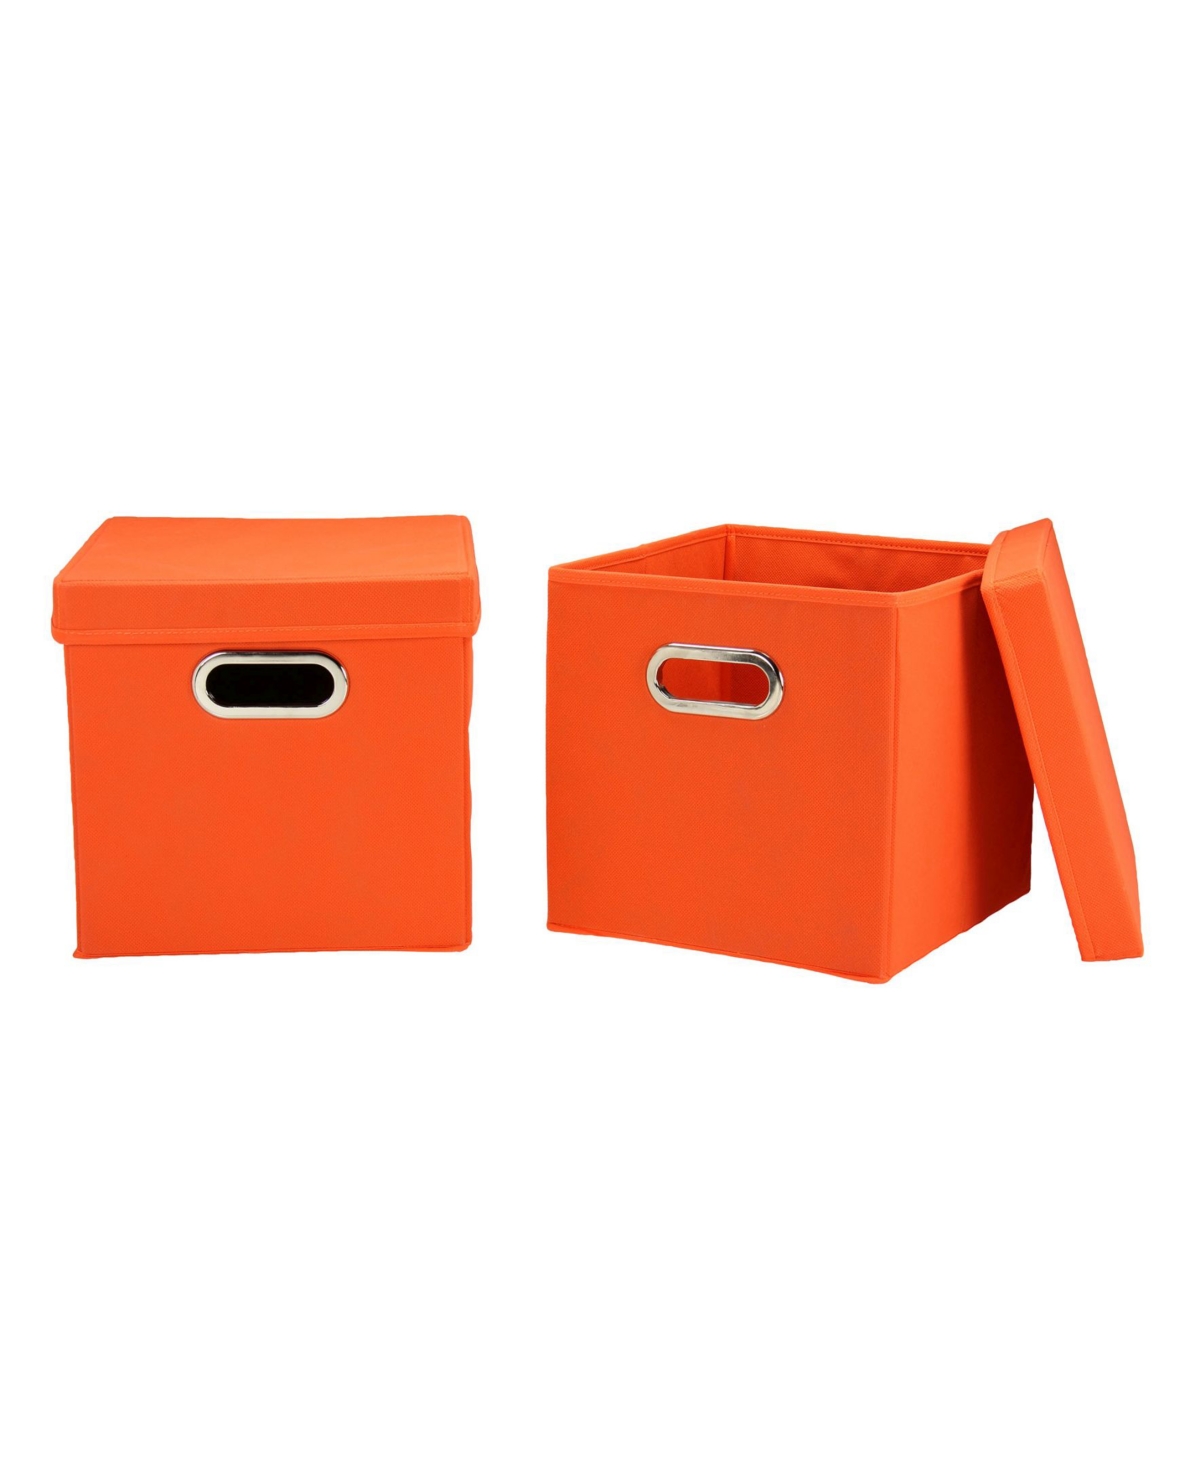 Household Essential Storage Bins with Lids, Set of 2 - Orange